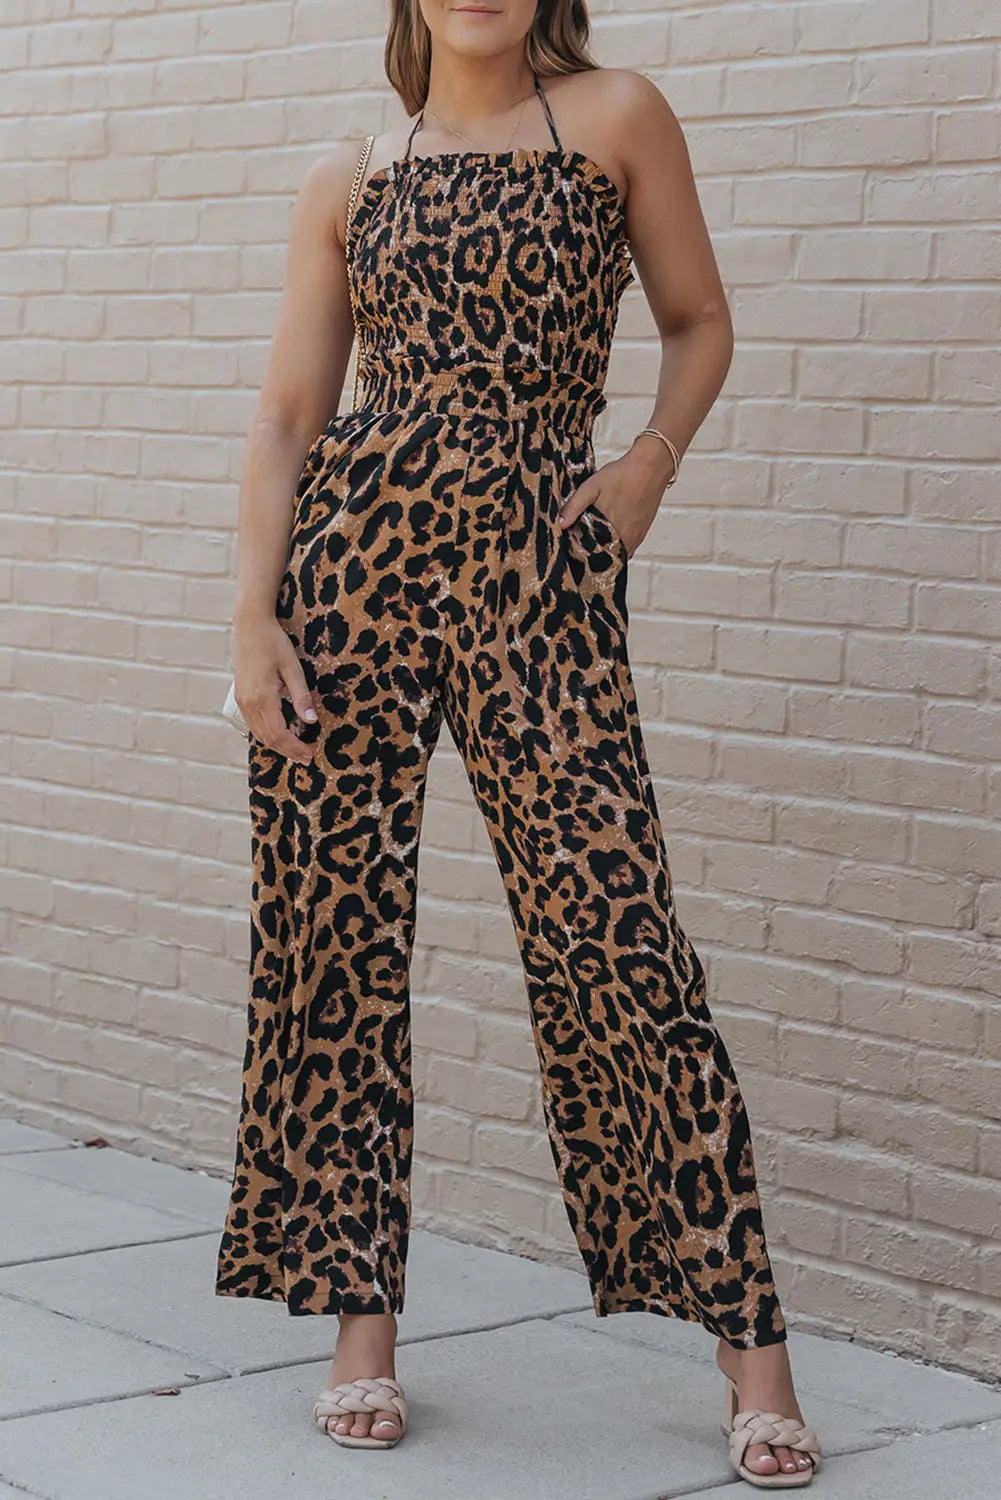 Leopard print halter neck backless wide leg jumpsuit - jumpsuits & rompers